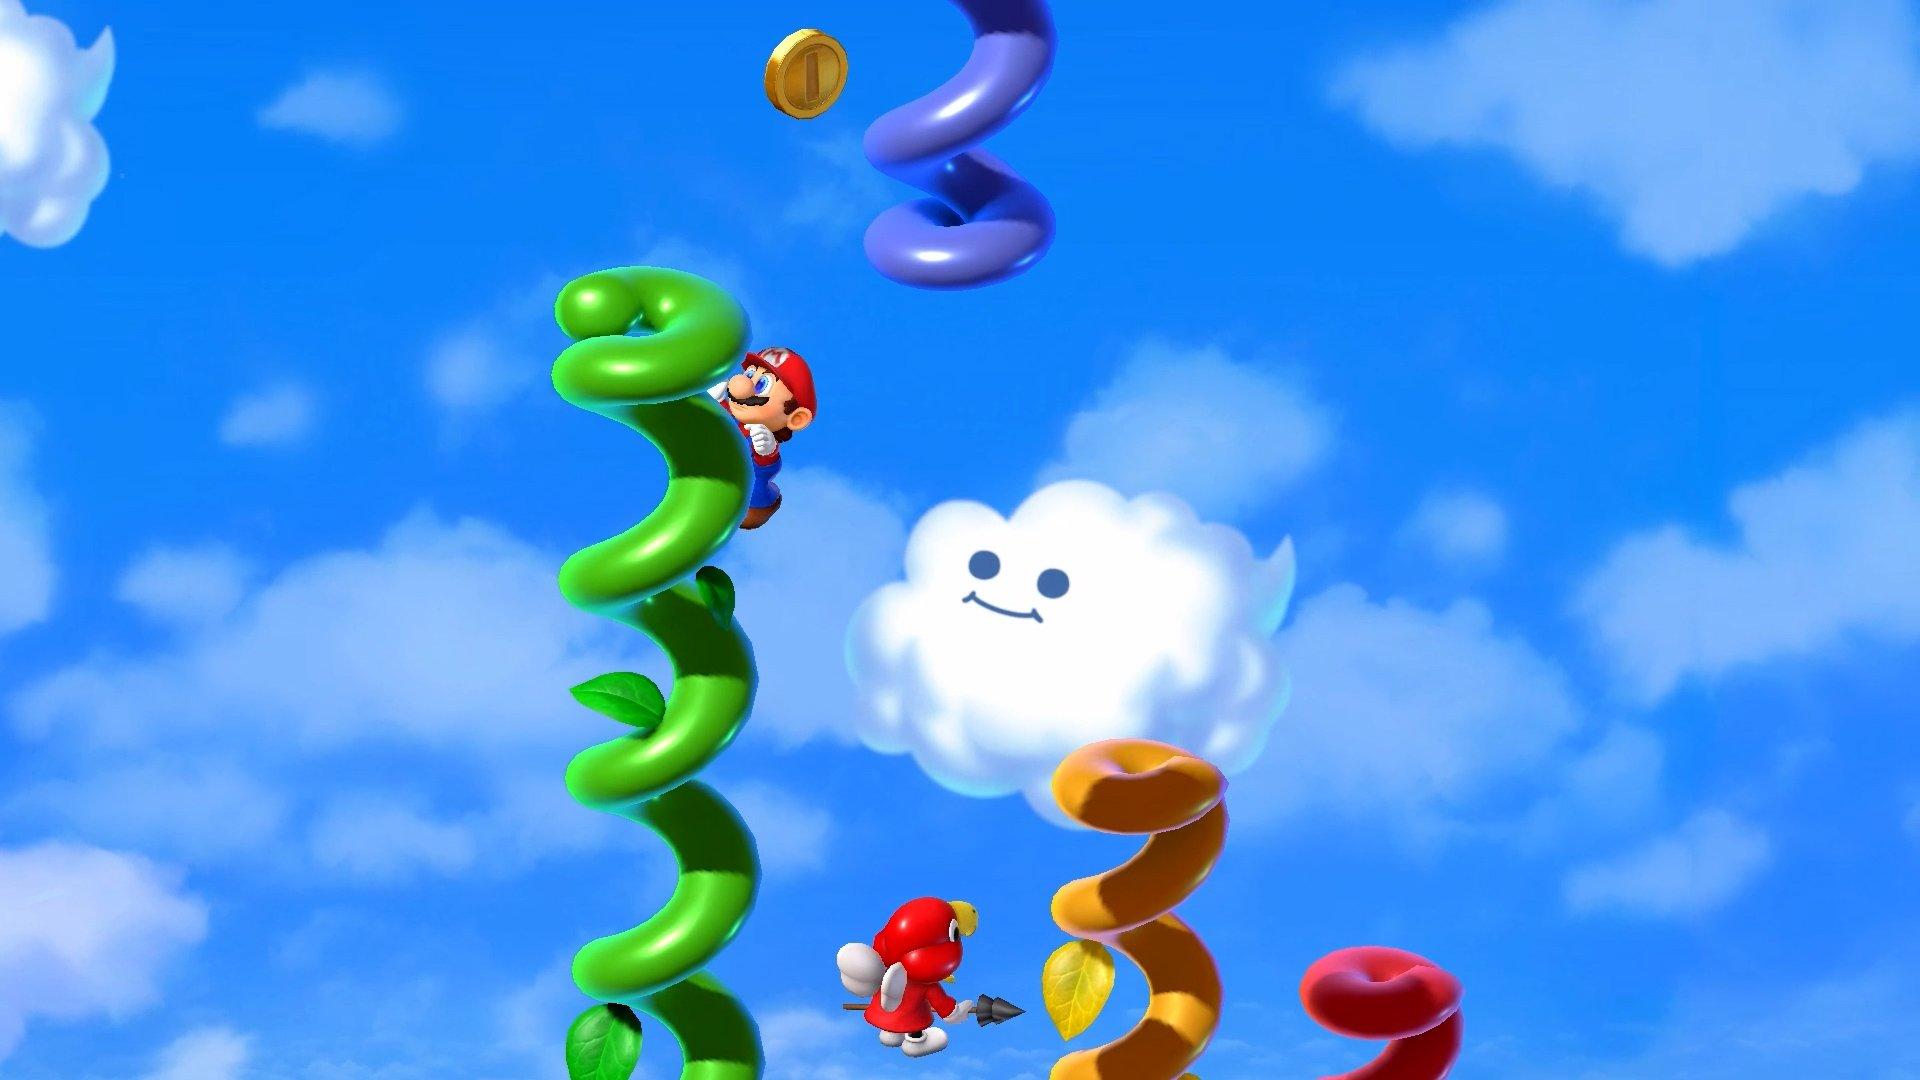 Super Mario RPG Nintendo | - | Nintendo Switch GameStop Switch